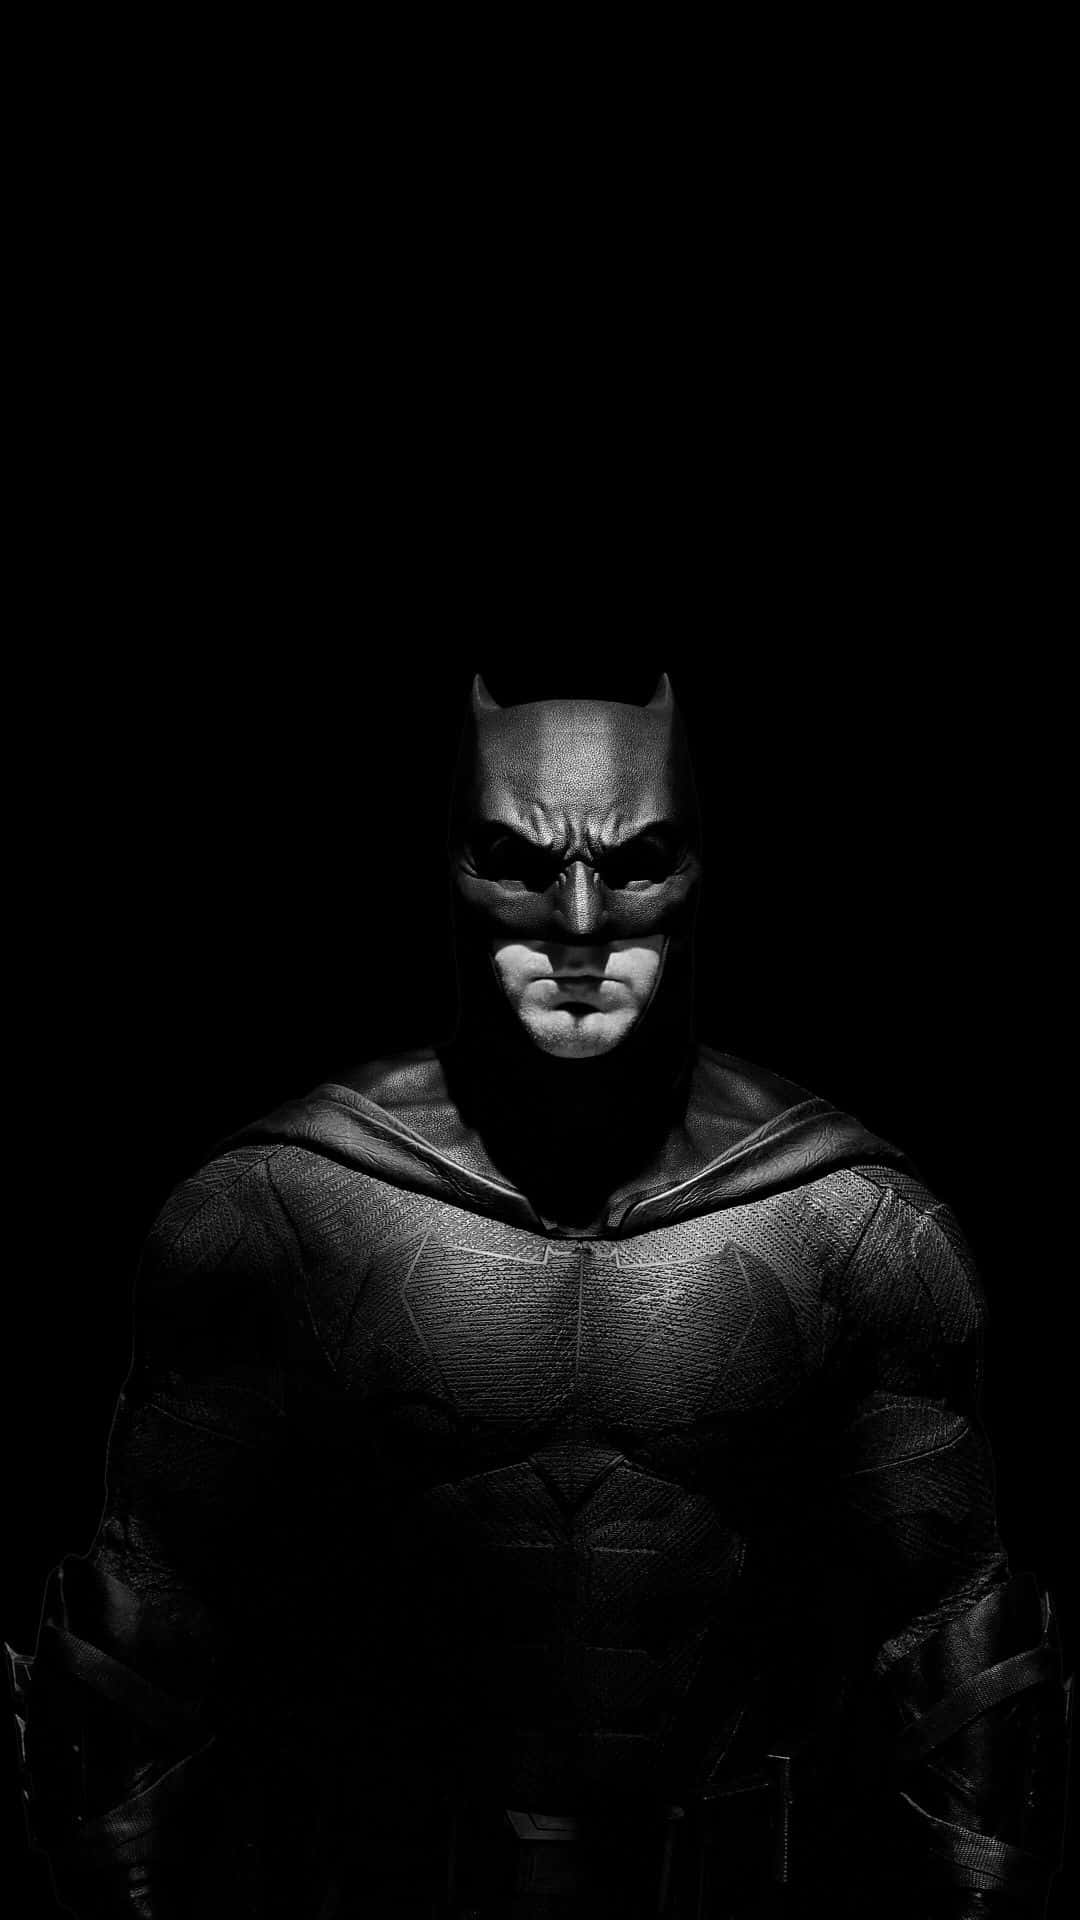 The Legendary Batman in the Spotlight Wallpaper